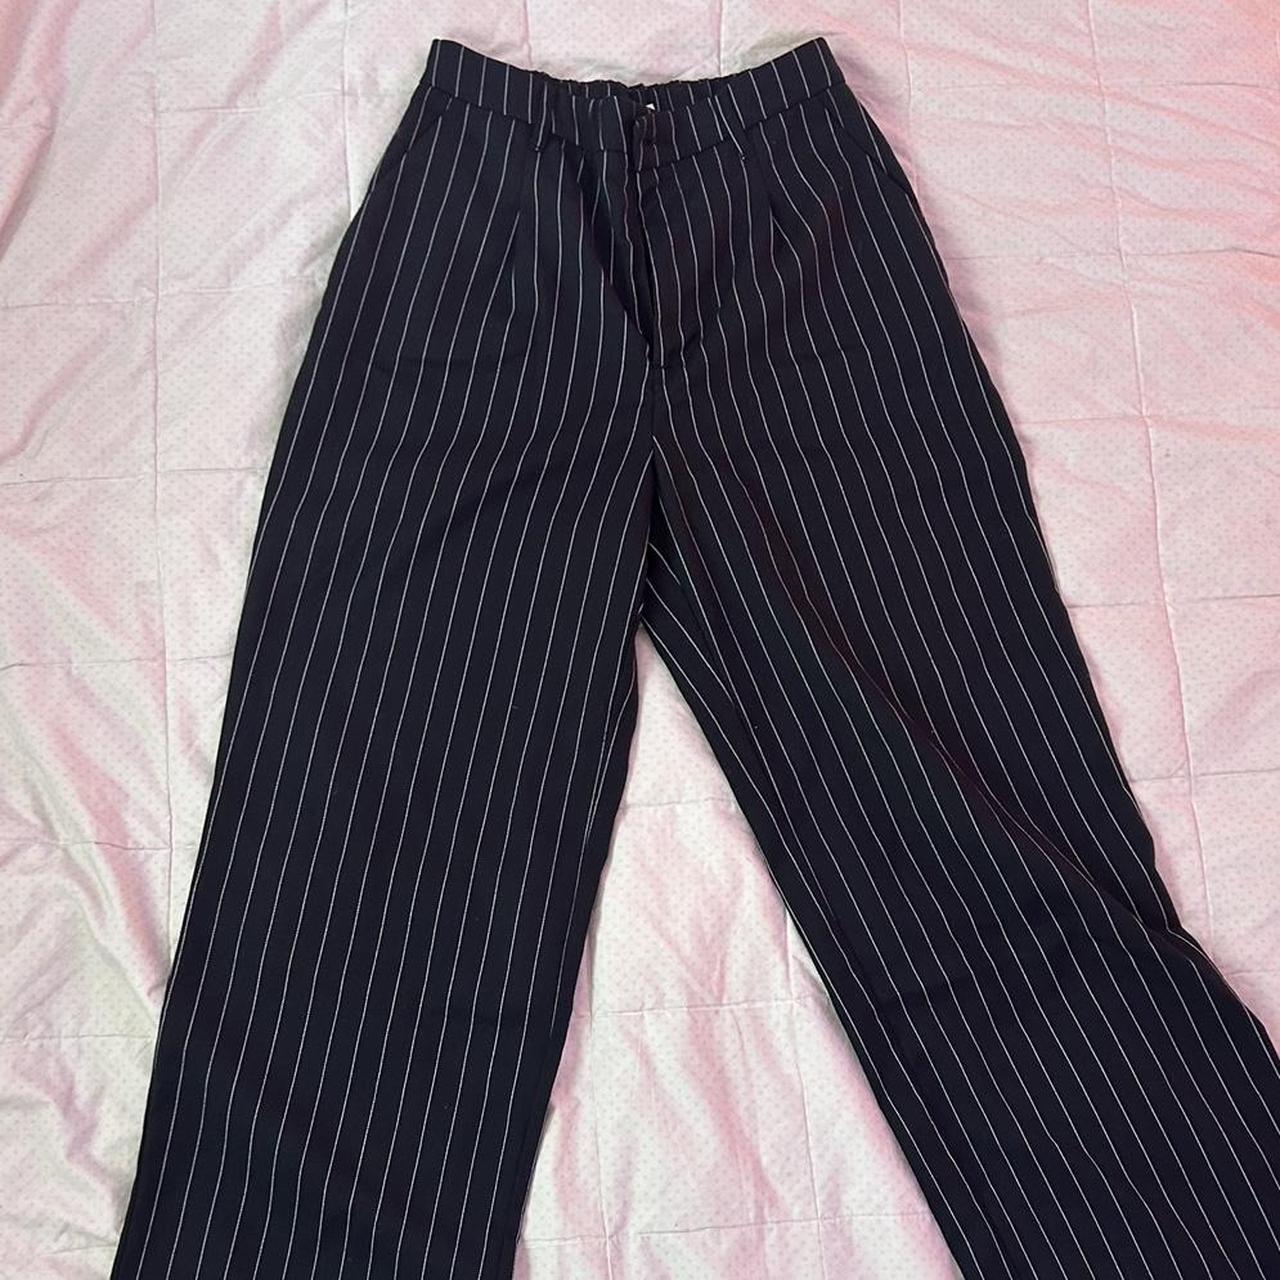 BLACK AND WHITE STRIPED PANTS 🥤🐰📞 size 6 h&m pants... - Depop